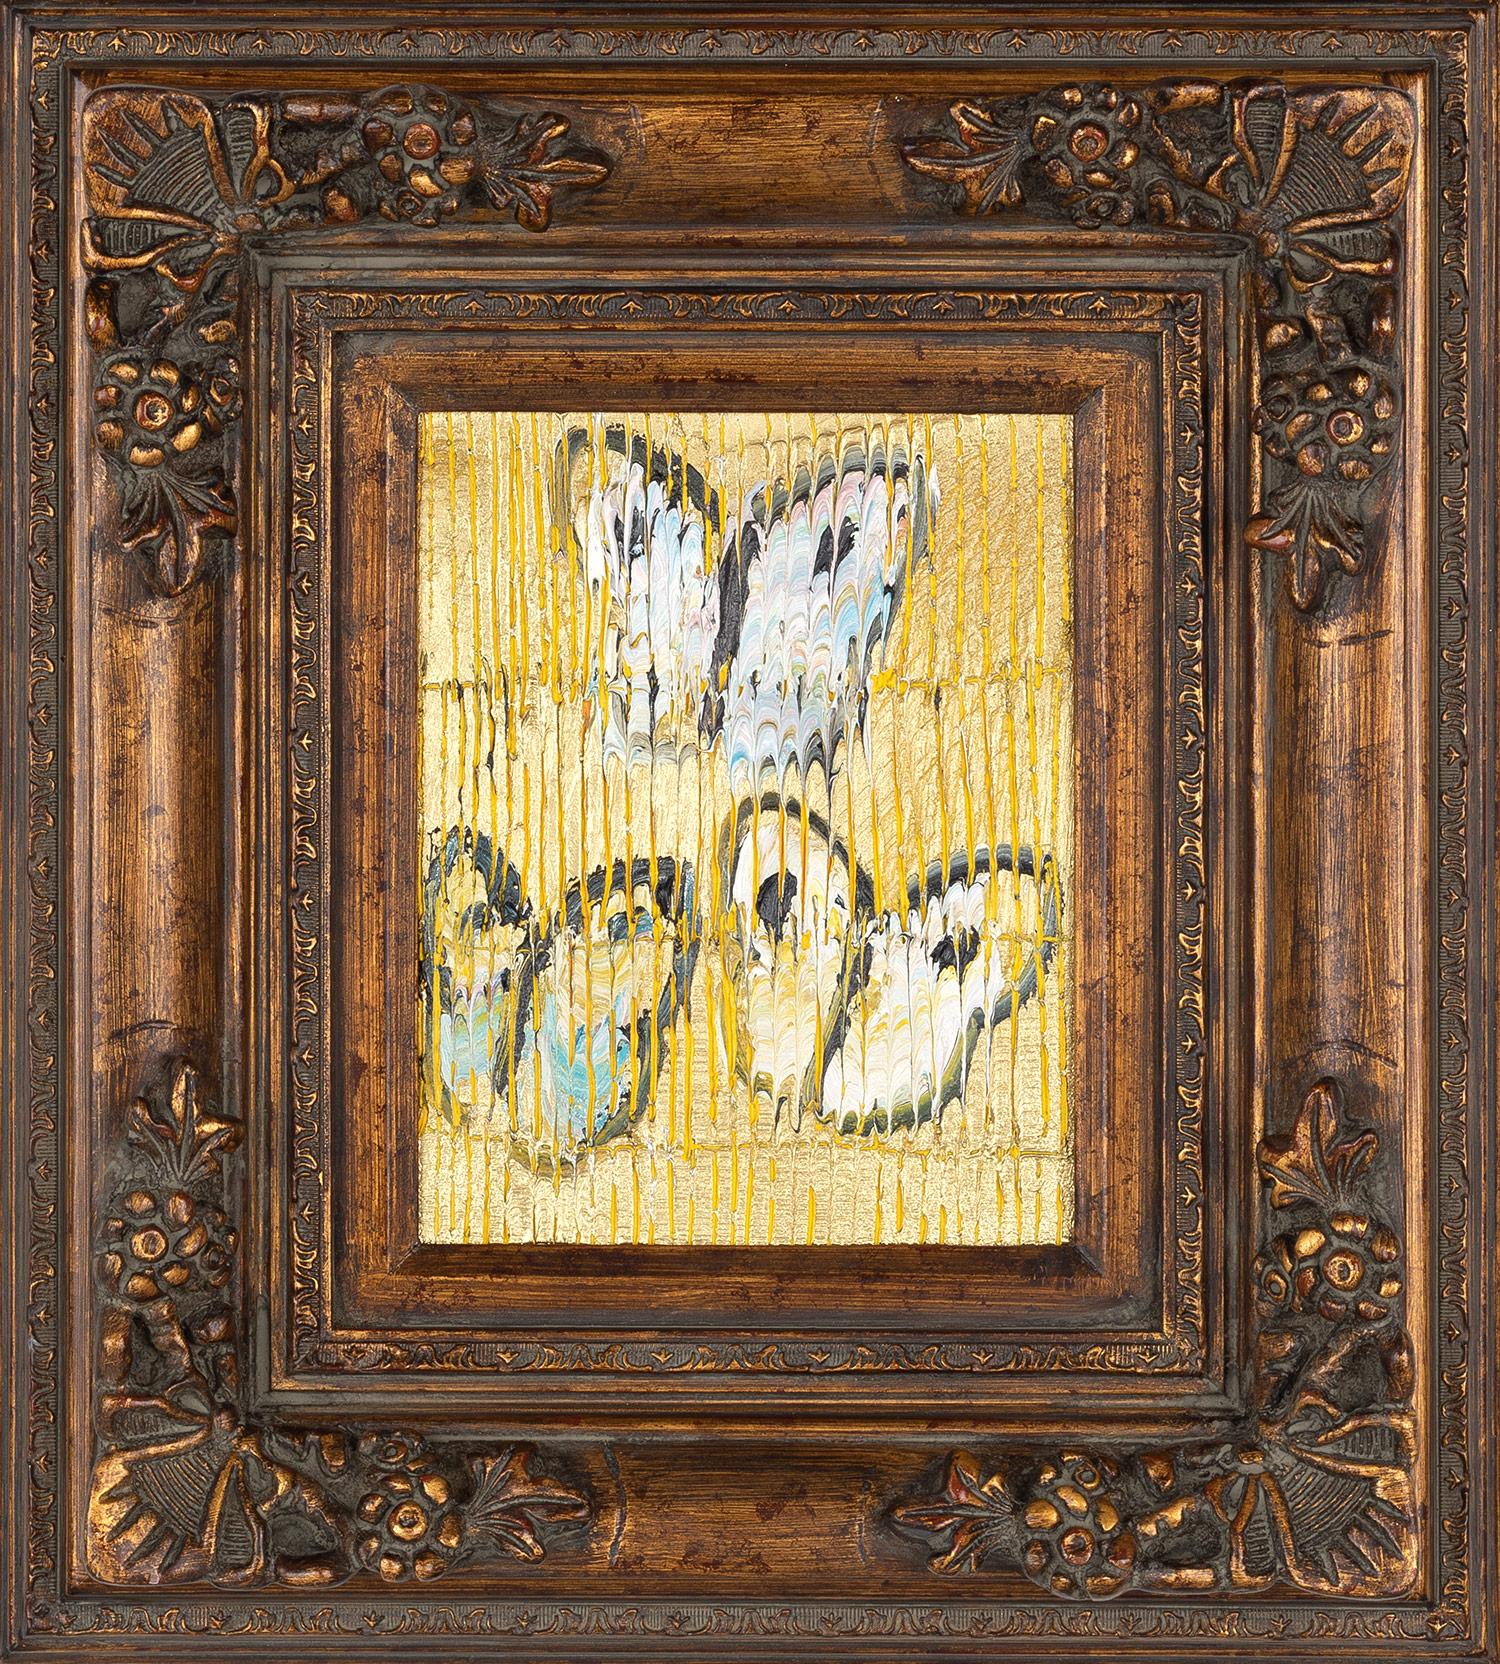 Hunt Slonem Animal Painting - "Untitled" (Black, Pink, Blue Butterflies on Metallic Gold with Yellow Scoring)